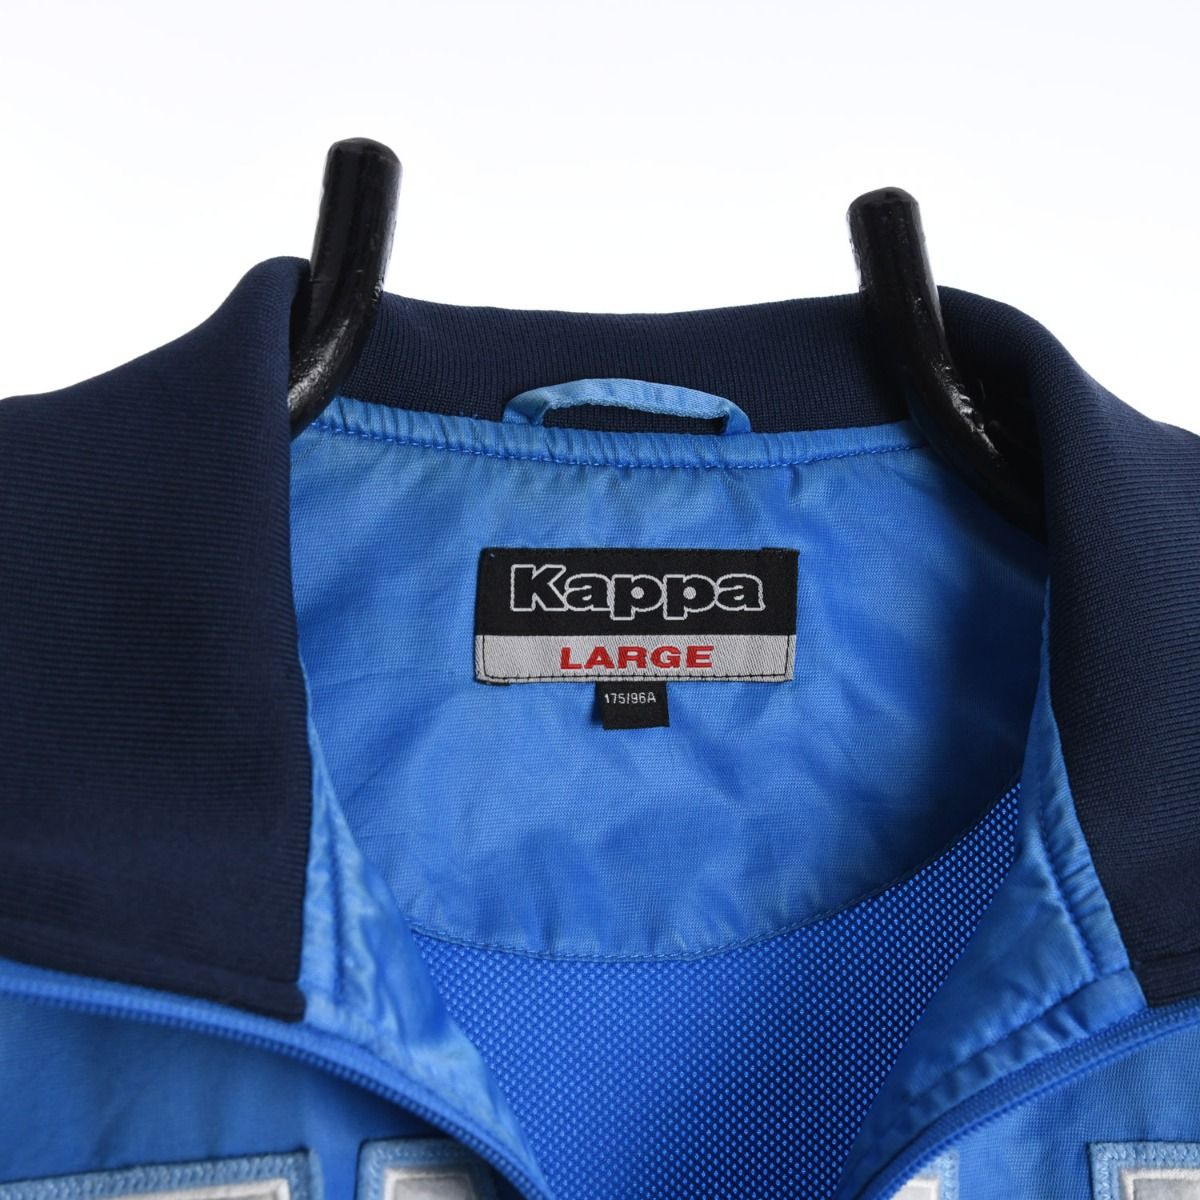 Kappa 'Italia' Late 90s Bomber Jacket